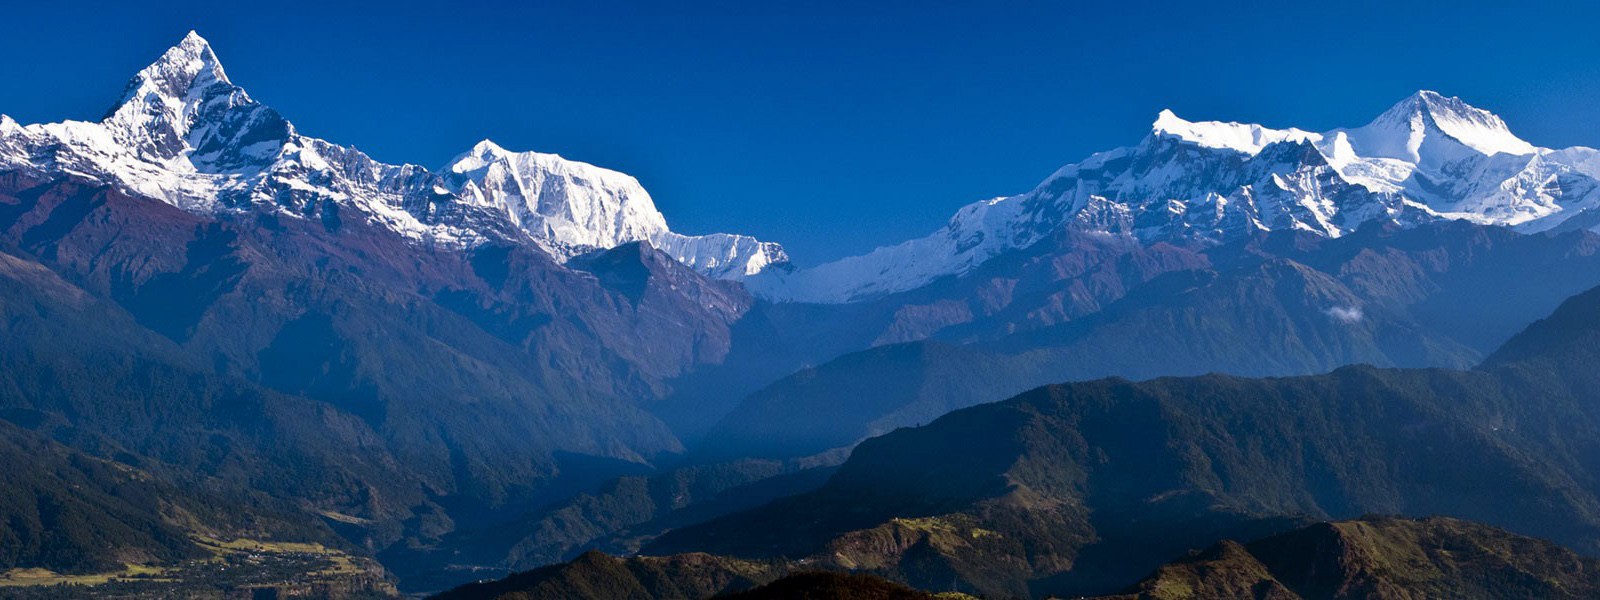 Machhapuchhre Model Trekking, Annapurna Region